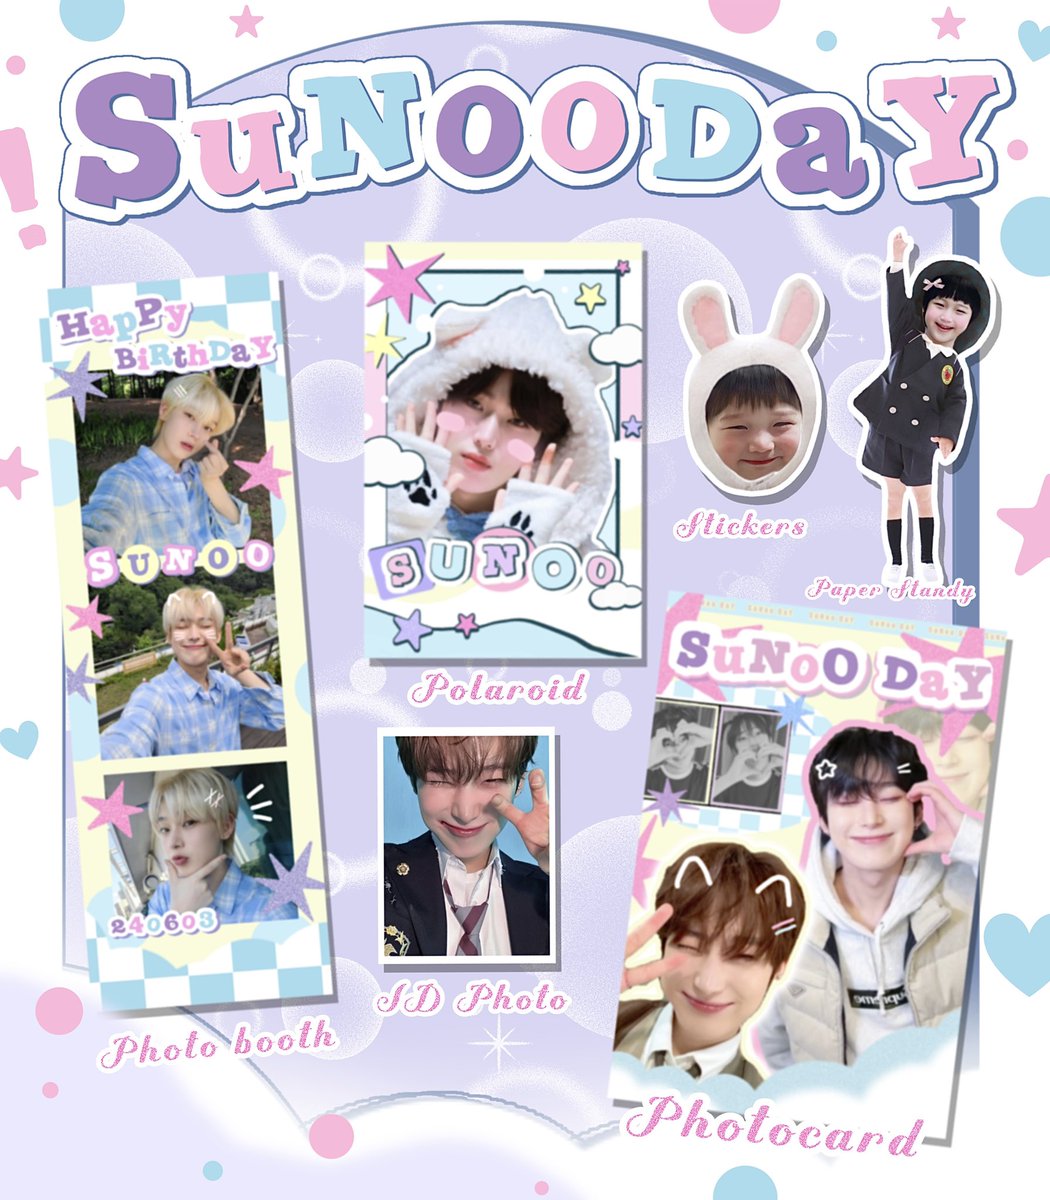 𐙚 𝓖𝓲𝓿𝓮𝓪𝔀𝓪𝔂𝓼 𝓢𝓾𝓷𝓸𝓸 𝓓𝓪𝔂 ᡣ𐭩ˎˊ˗
🍥Pls rt🪽

 =͟͟͞♡  ꒰ིྀ ᴏɴʟʏ 6 ꜱᴇᴛ ꒱ིྀ 🐈꒰ˆִっ. ɞ̴̶̷̥ˆ꒱֯💘

✩ Photobooth
✩ Polaroid
✩ Photocard
✩ Paper Standy
✩ Stickers
✩ ID Photo

💭gg from   ; 23 JUNE 20.00 🍧
🗯️shipping ; 45 ฿💌

#Happy_Sunoo_Day #HappySunooDay